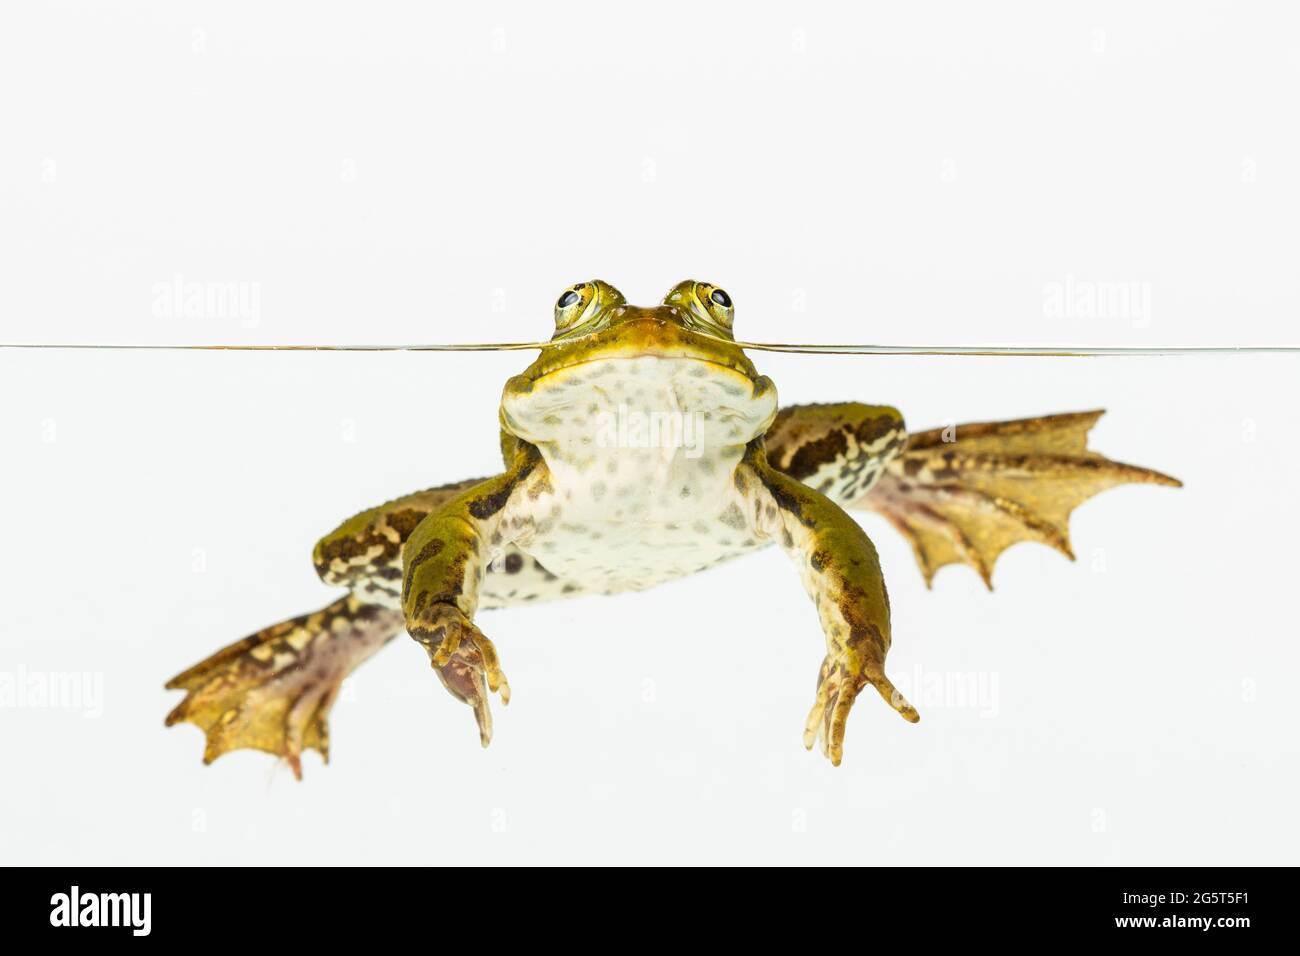 European edible frog, common edible frog (Rana kl. esculenta, Rana esculenta, Pelophylax esculentus), peering out of the water, cut-out Stock Photo